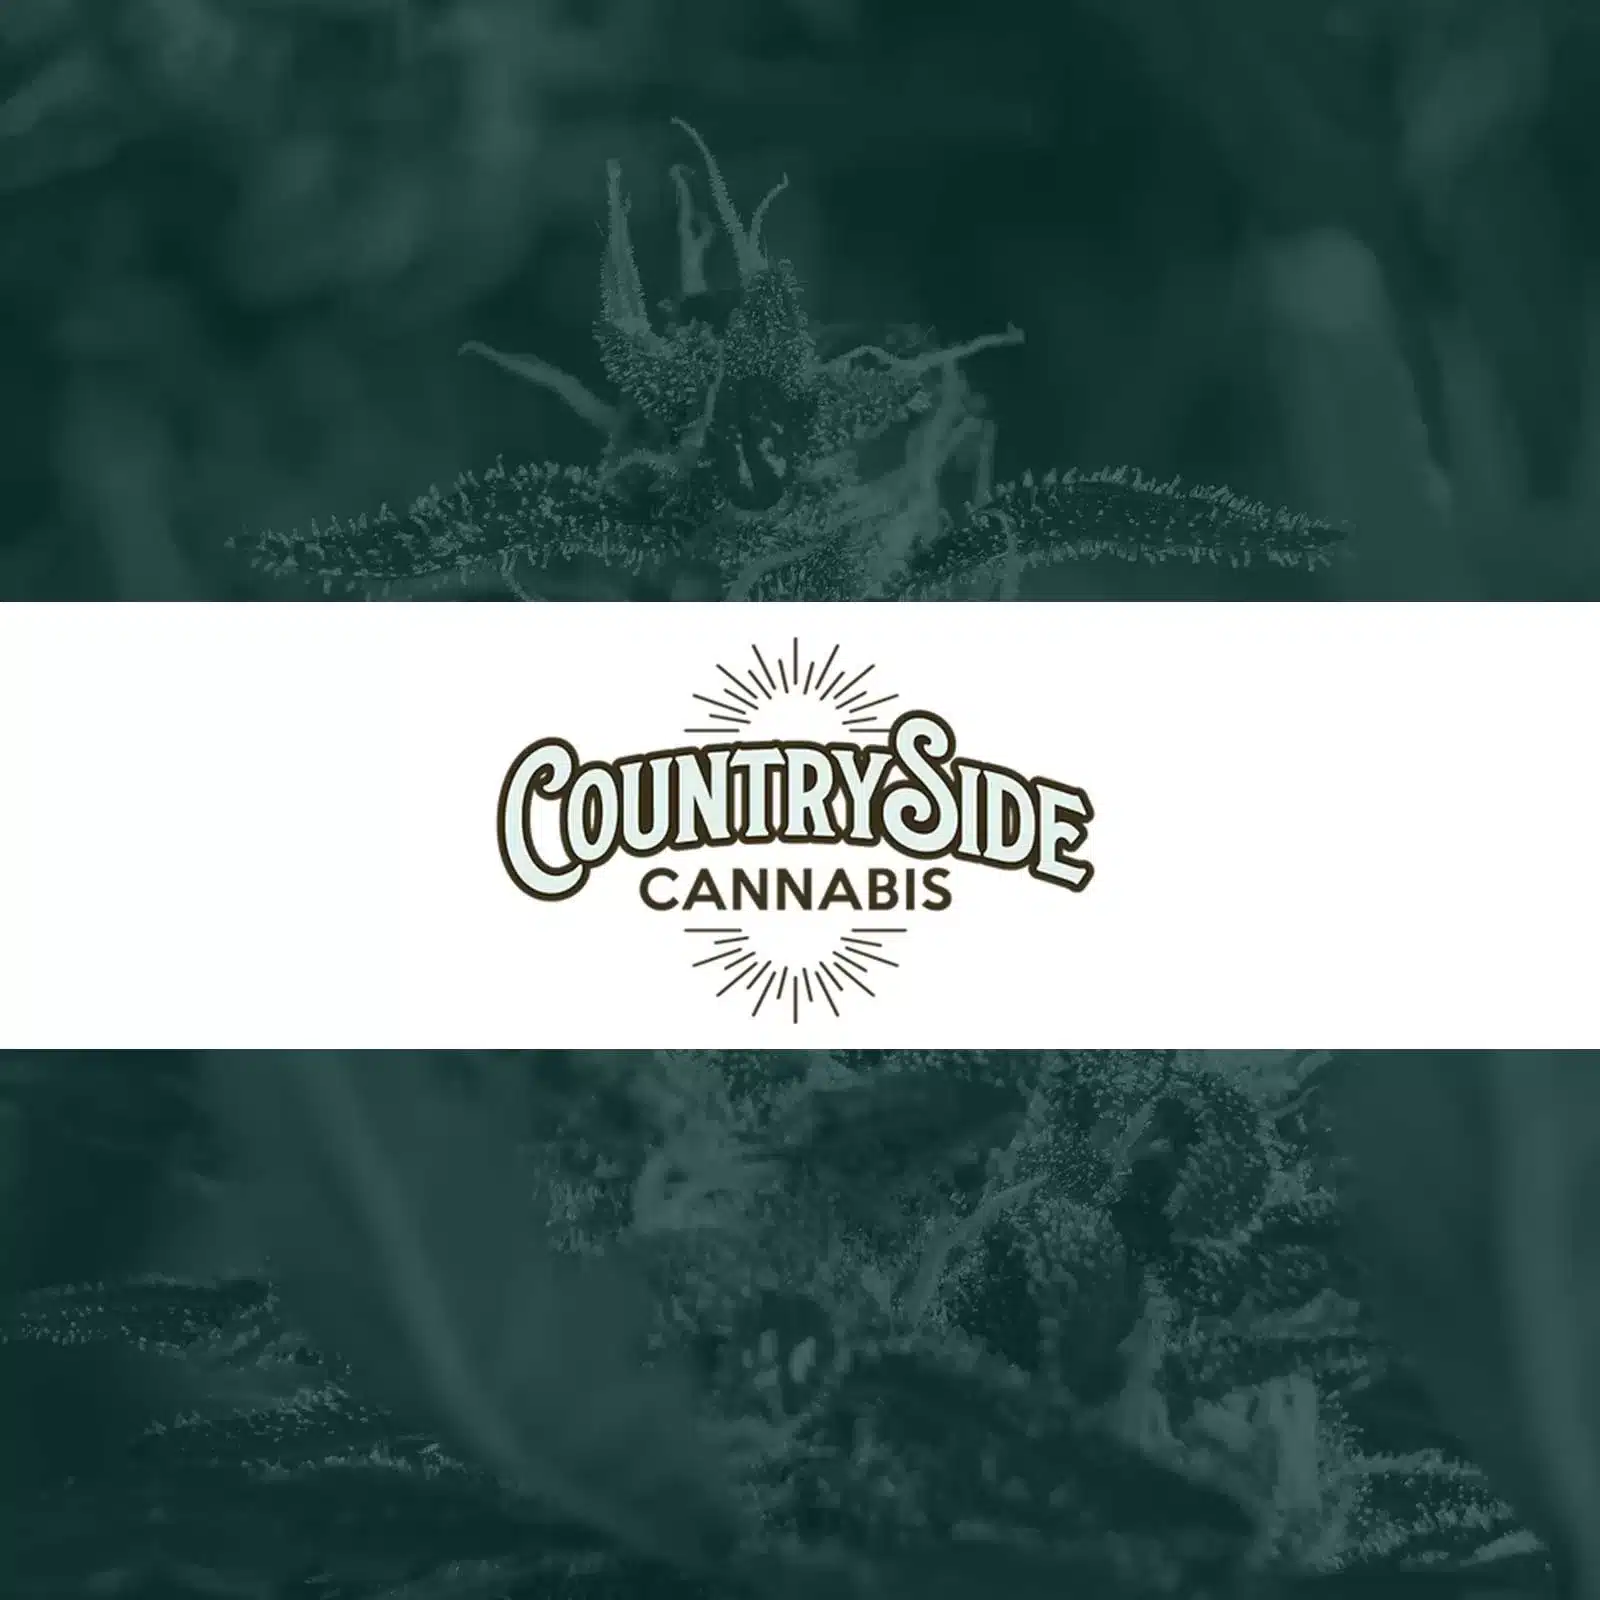 Countryside Cannabis